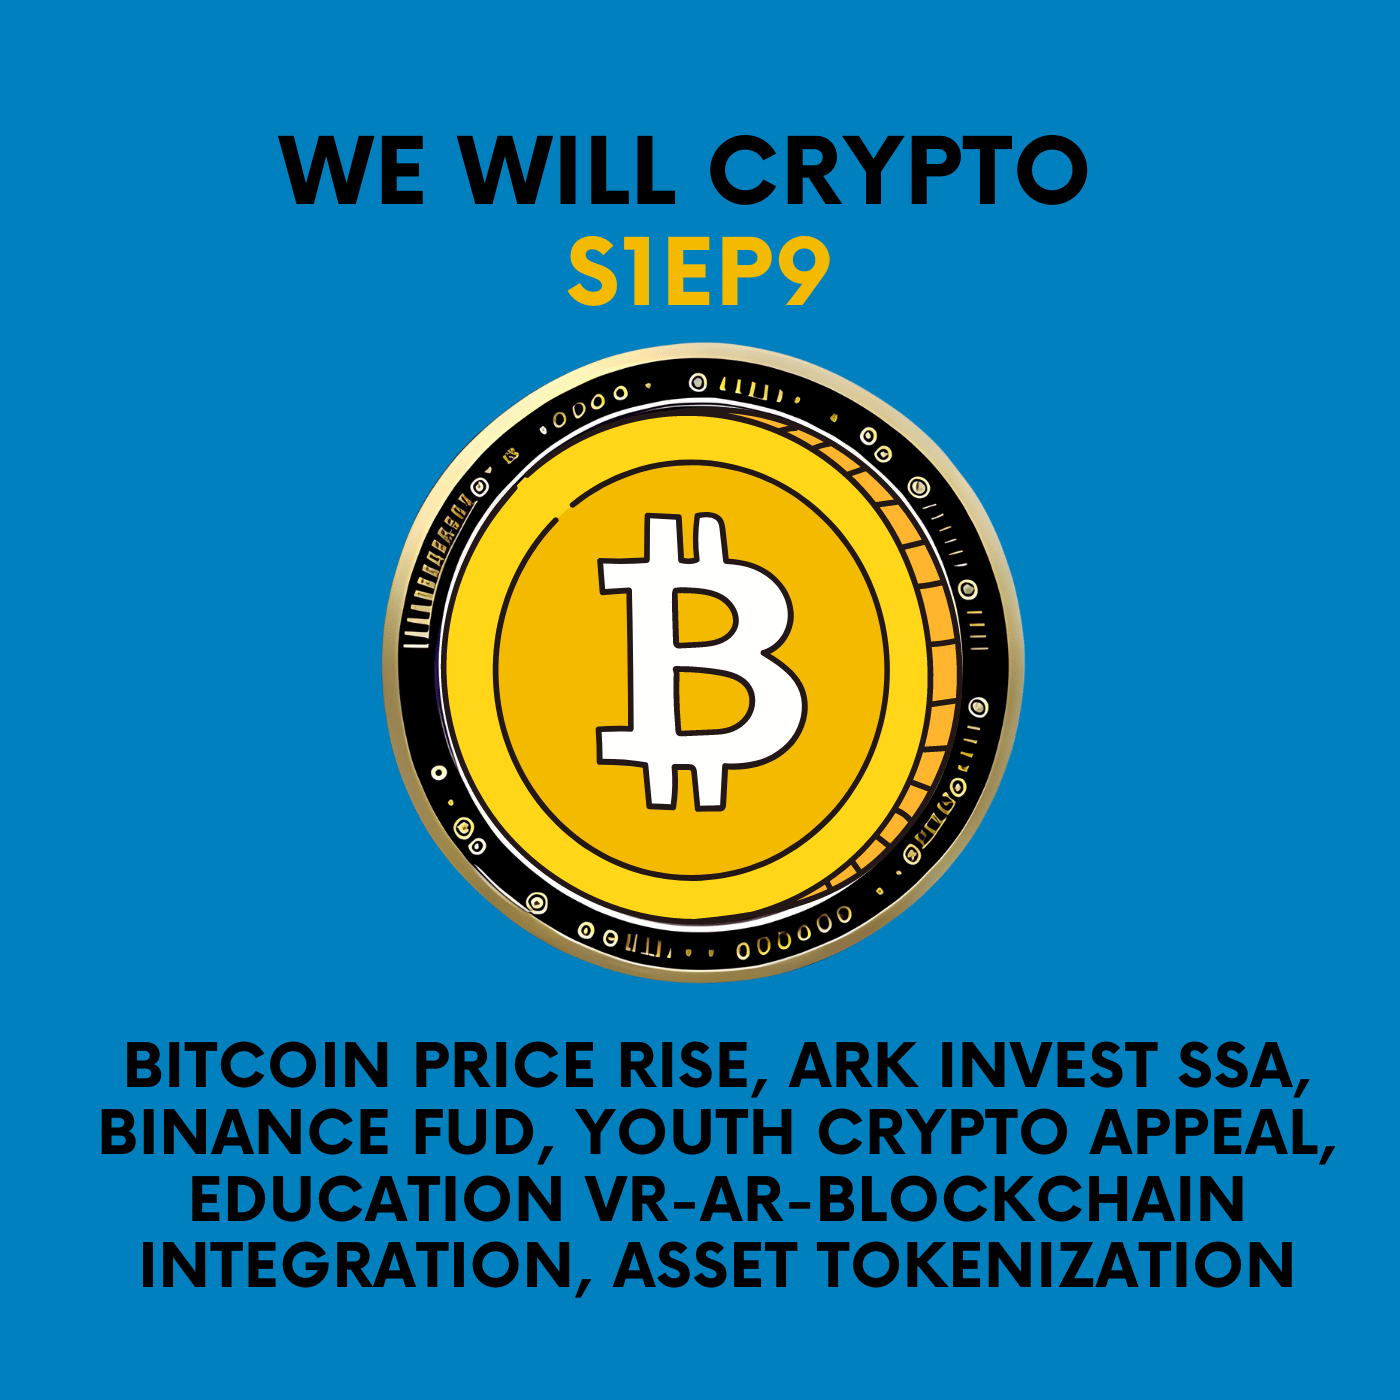 Bitcoin Price Rise, ARK Invest SSA, Binance FUD, Youth Crypto Appeal, Education VR-AR-Blockchain Integration, Asset Tokenization